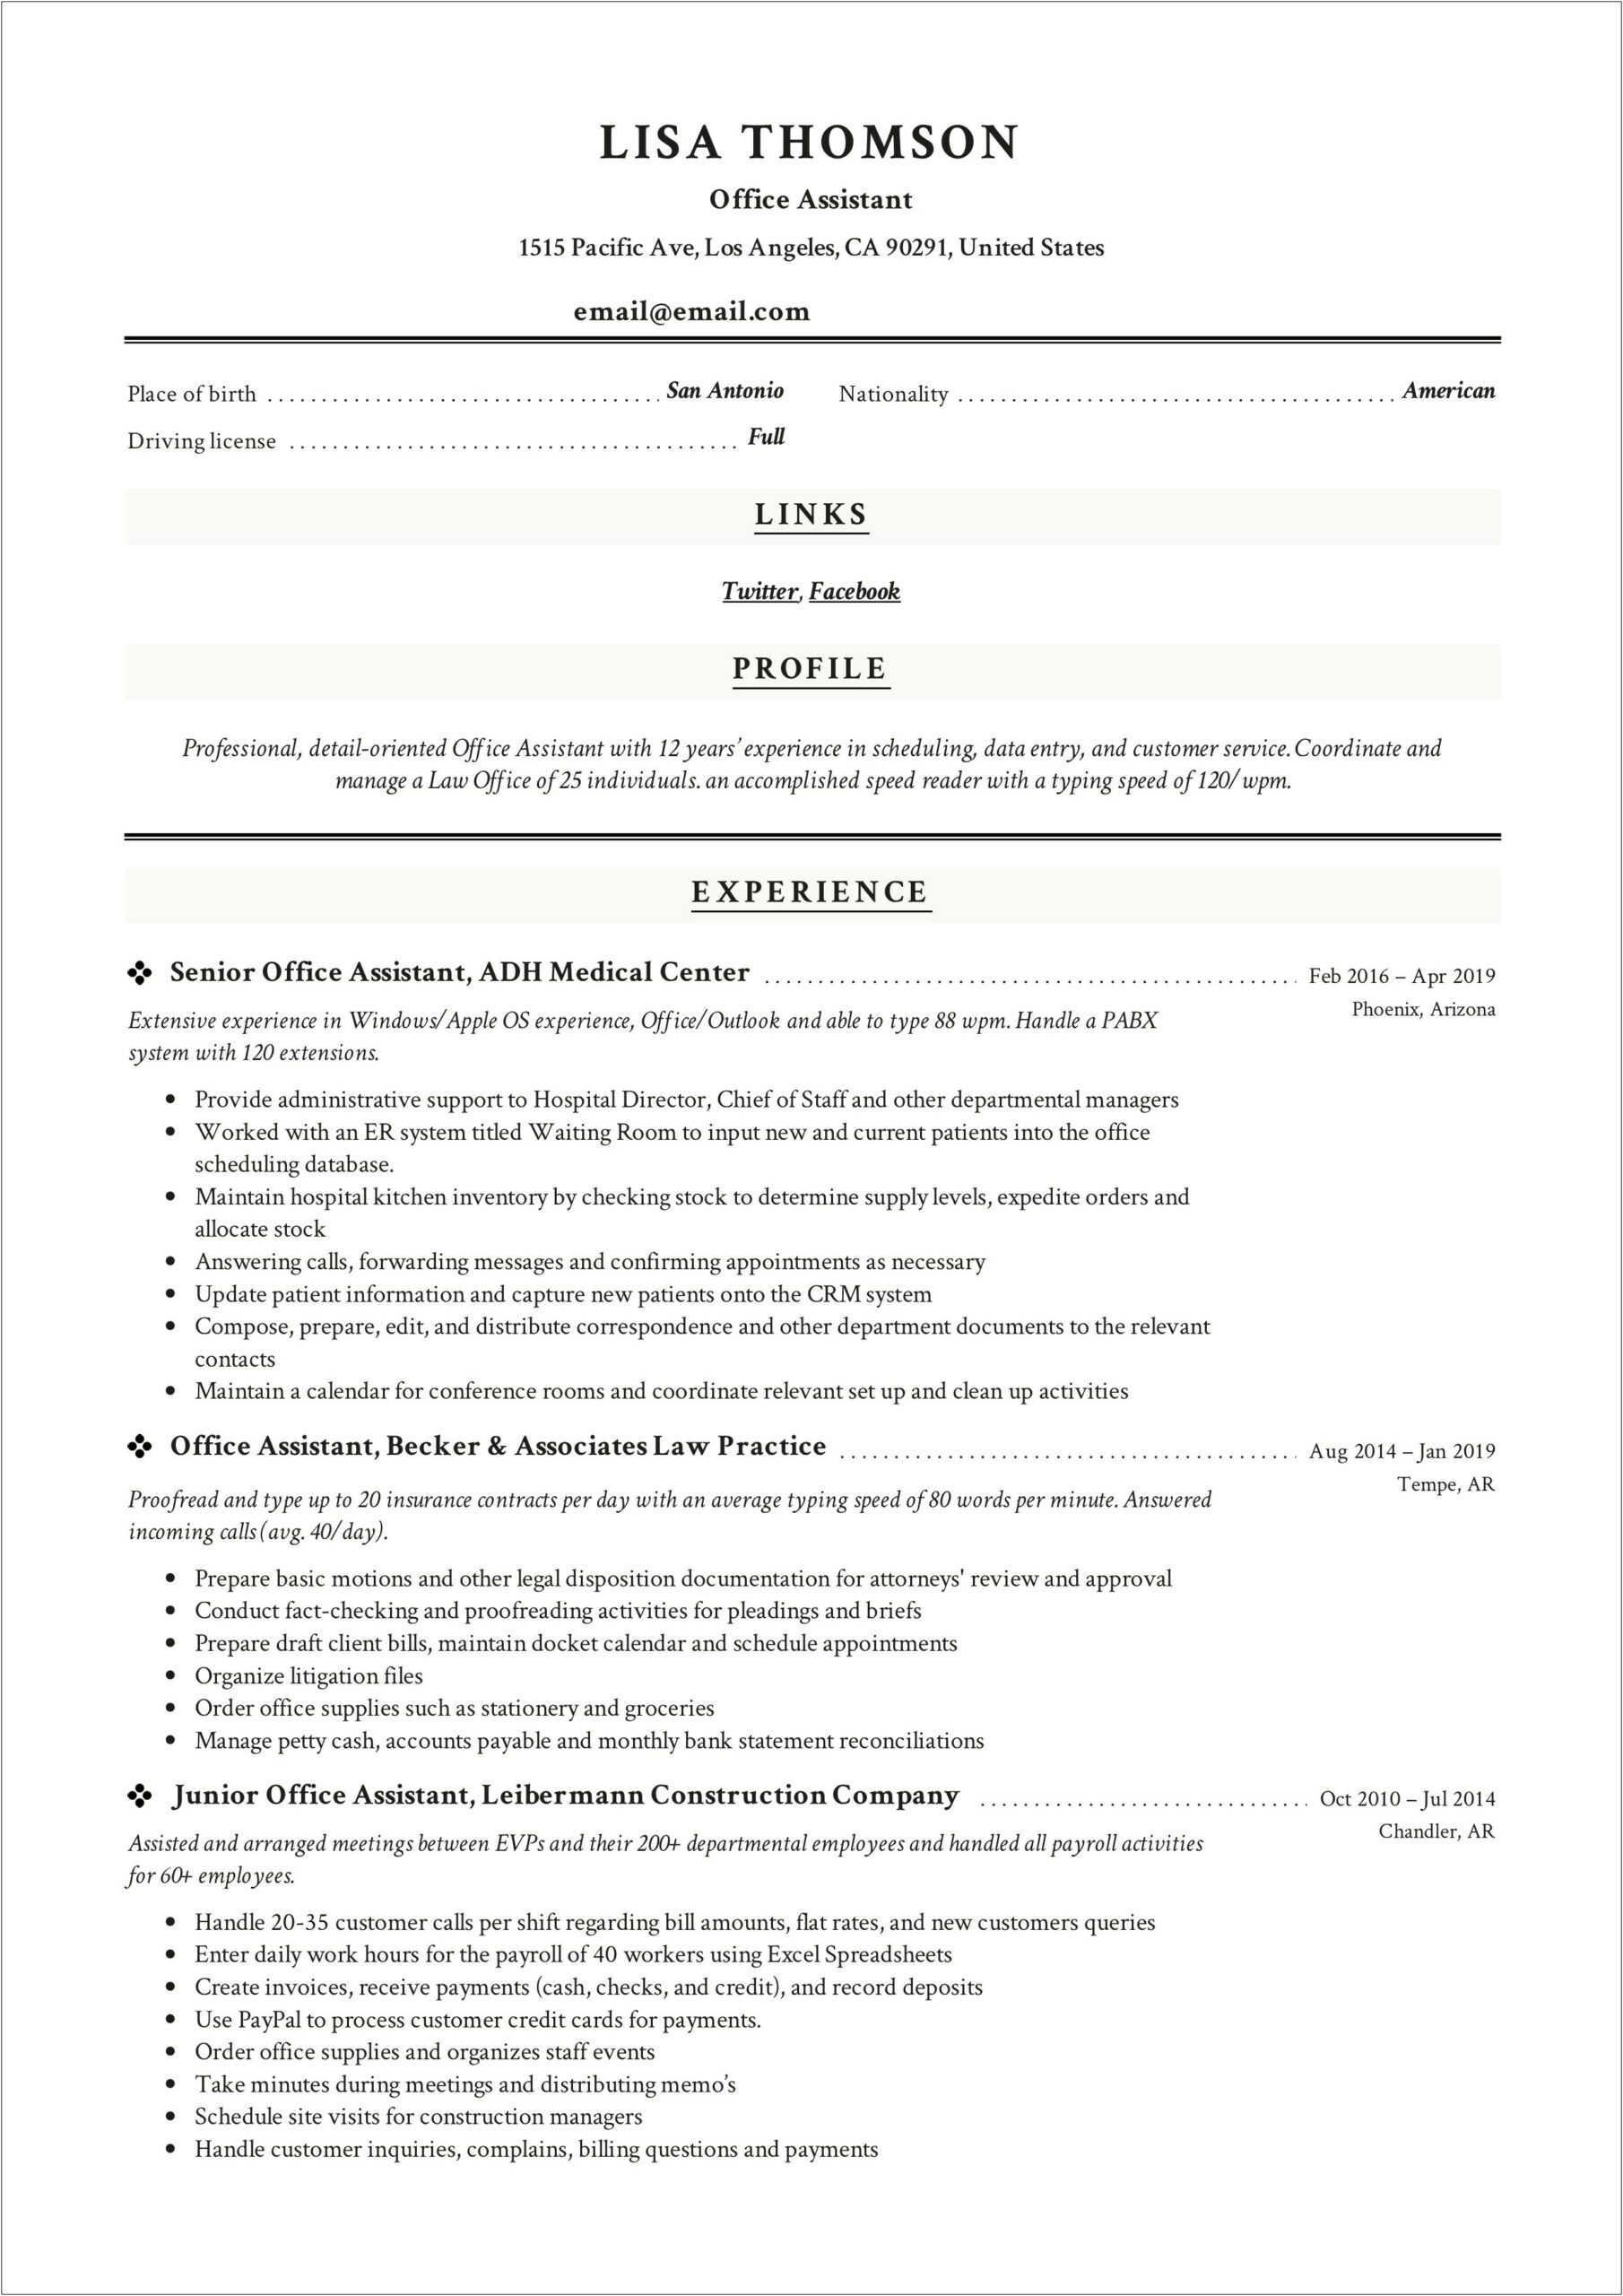 Administrative Assistant Description Construction Company Resume